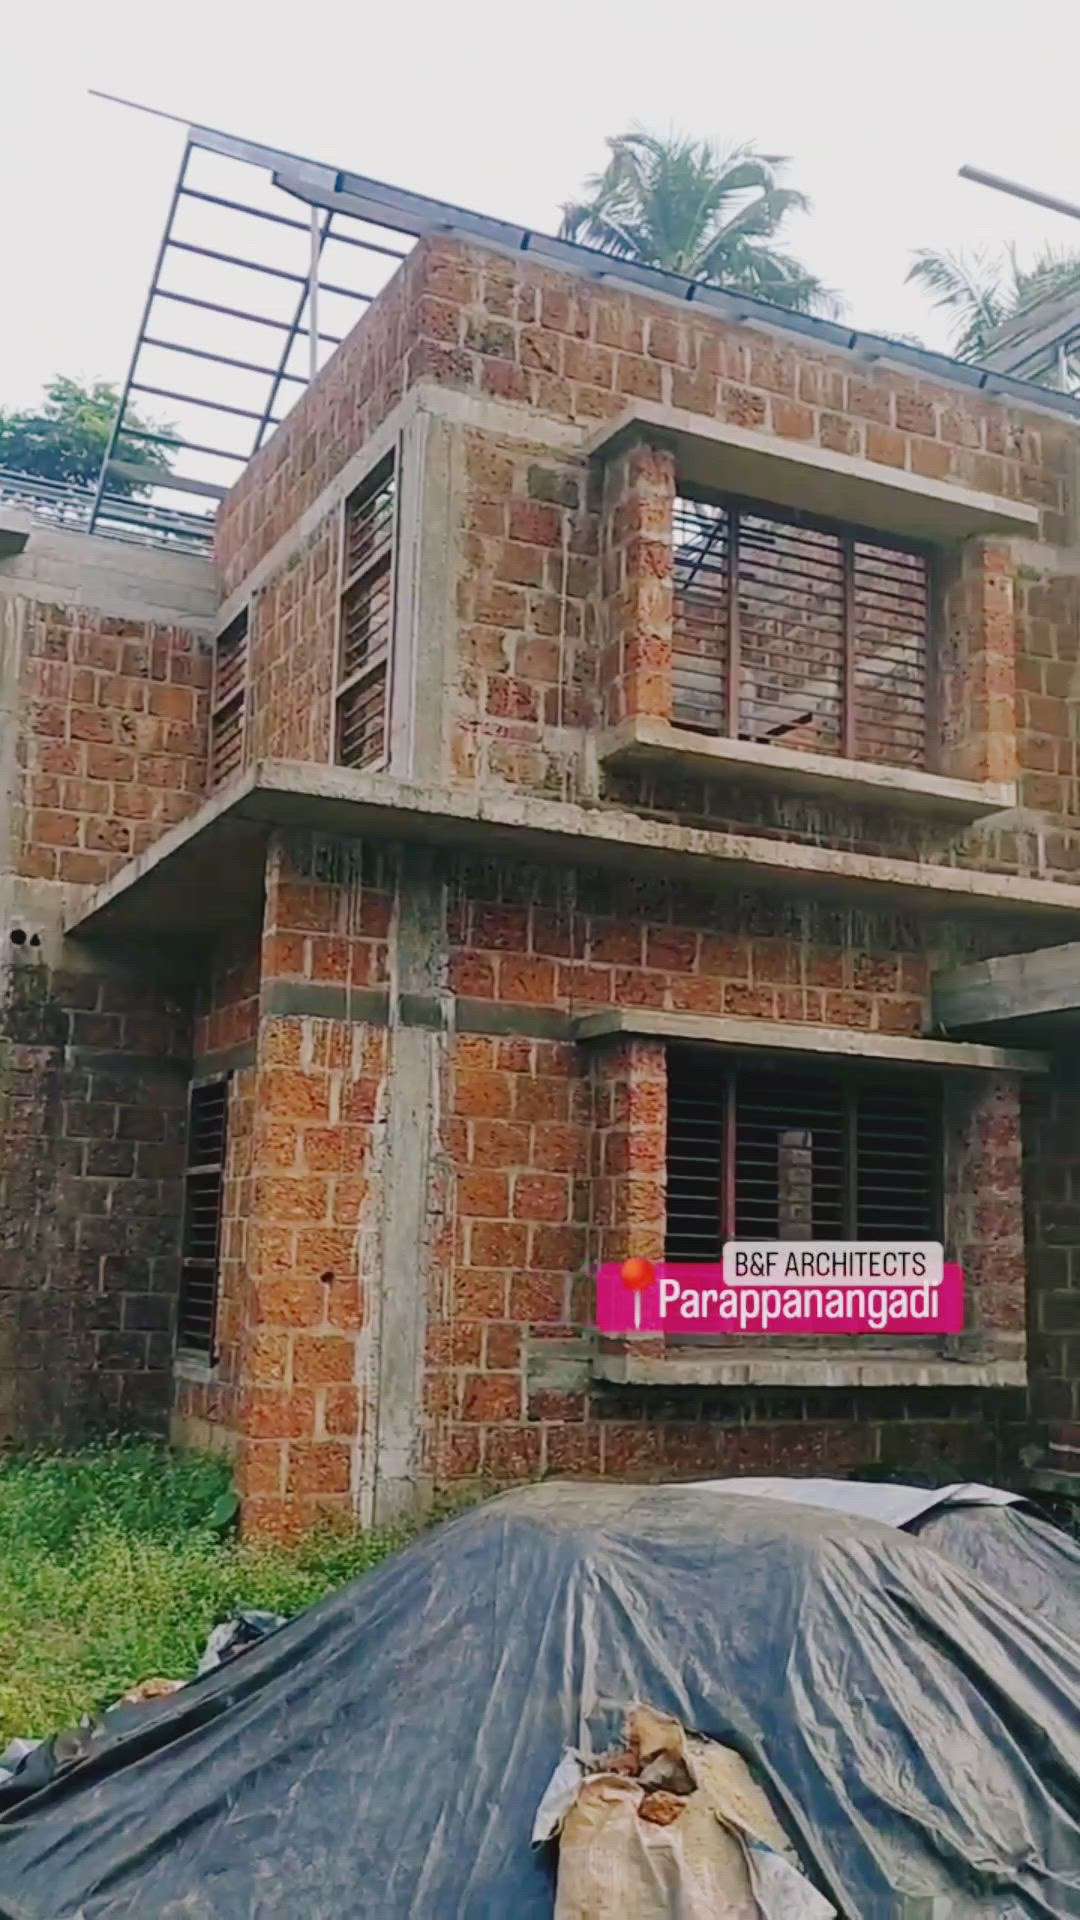 B&F ARCHITECTS 

#parappanangadi #housedesign #architects #architecturedesign #Kozhikode